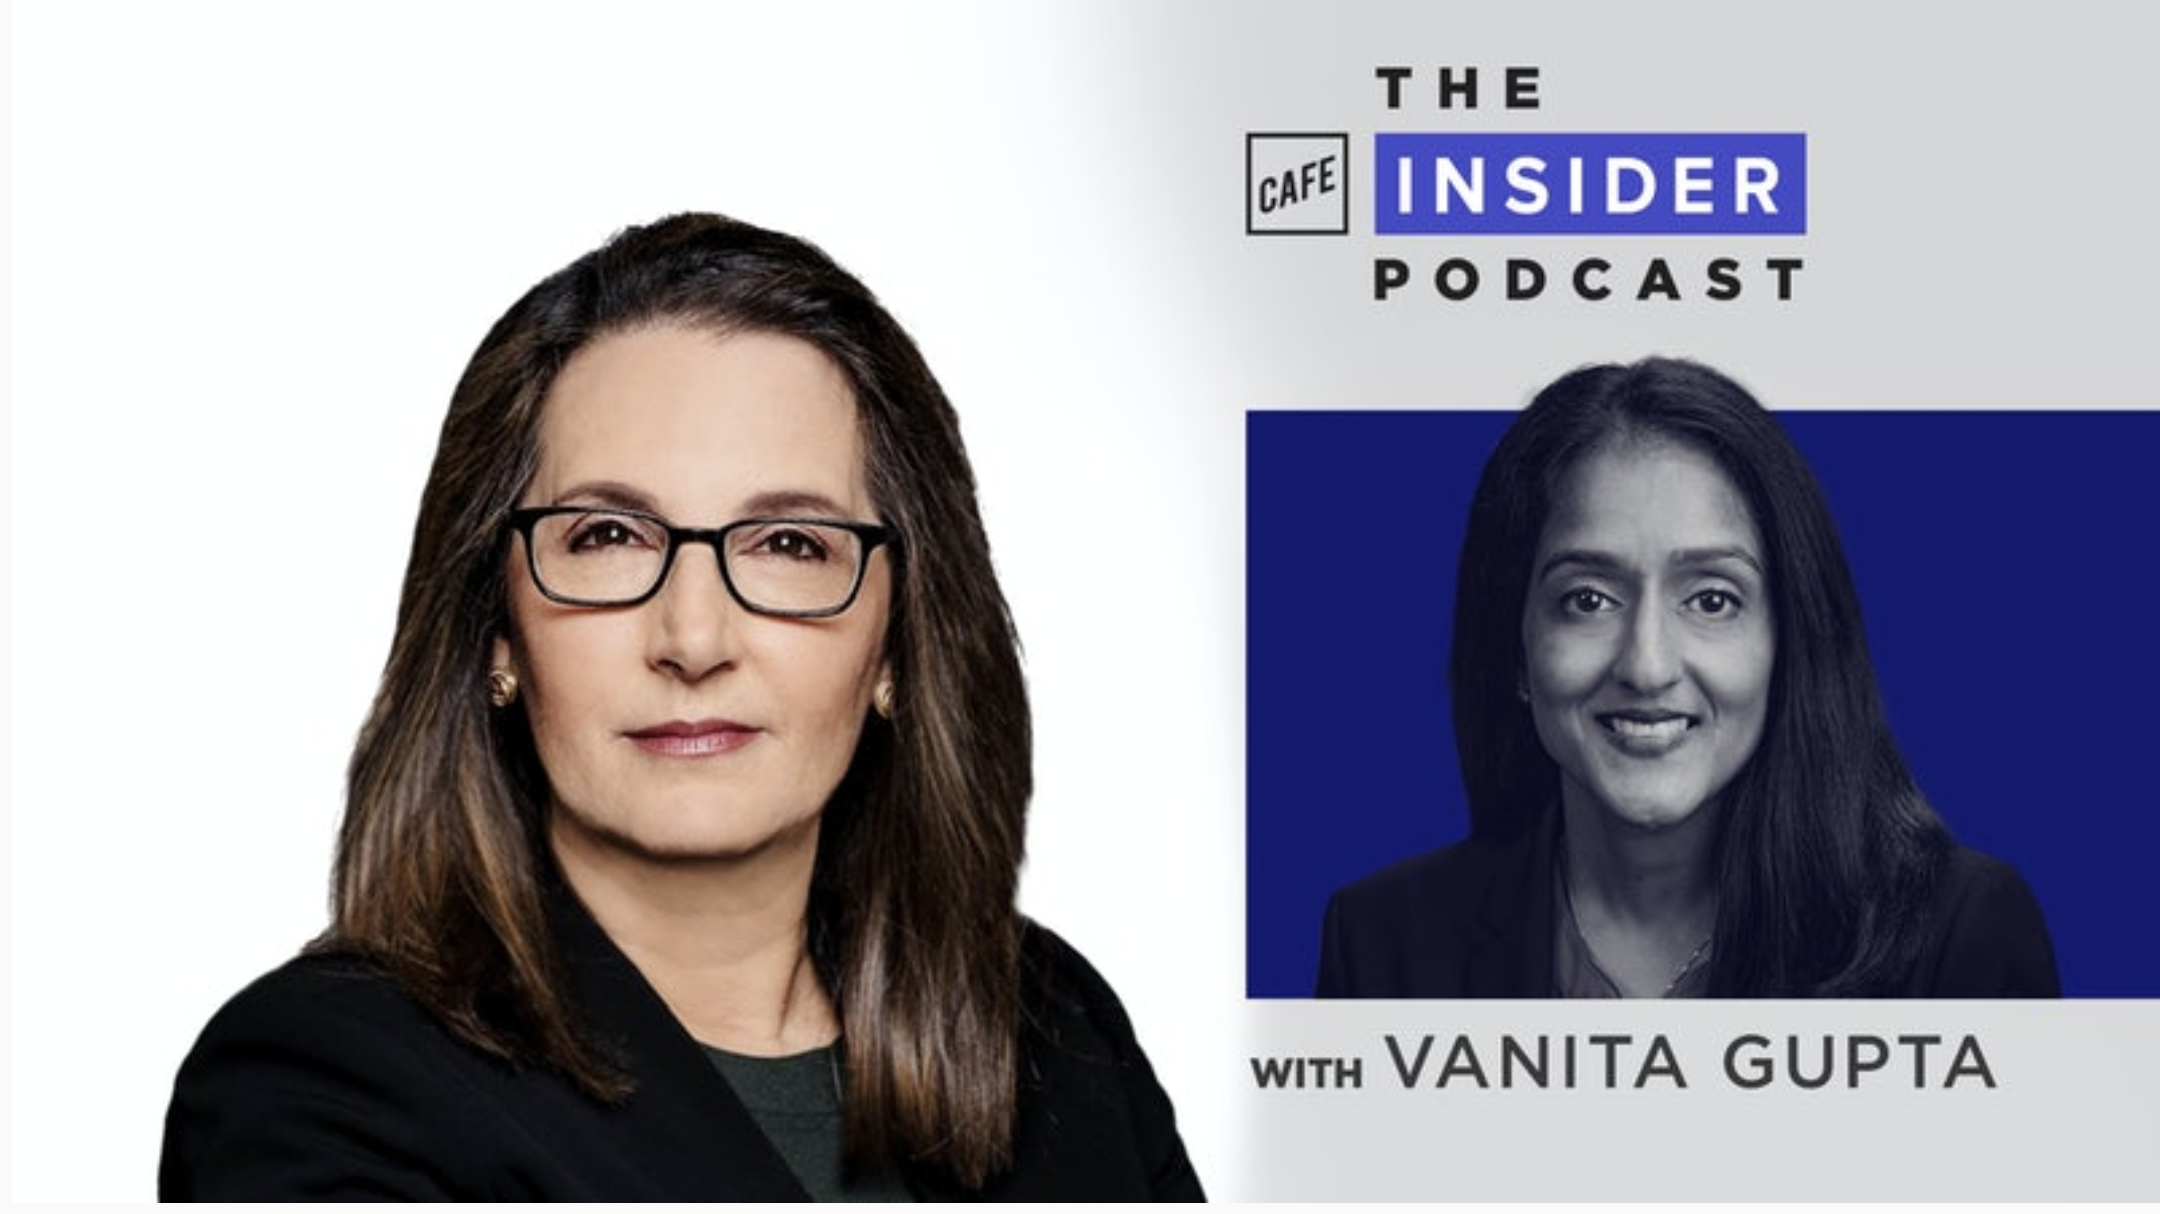  Professor Joyce Vance interviewed United States Associate Attorney General Vanita Gupta on the CAFE Insider Podcast.